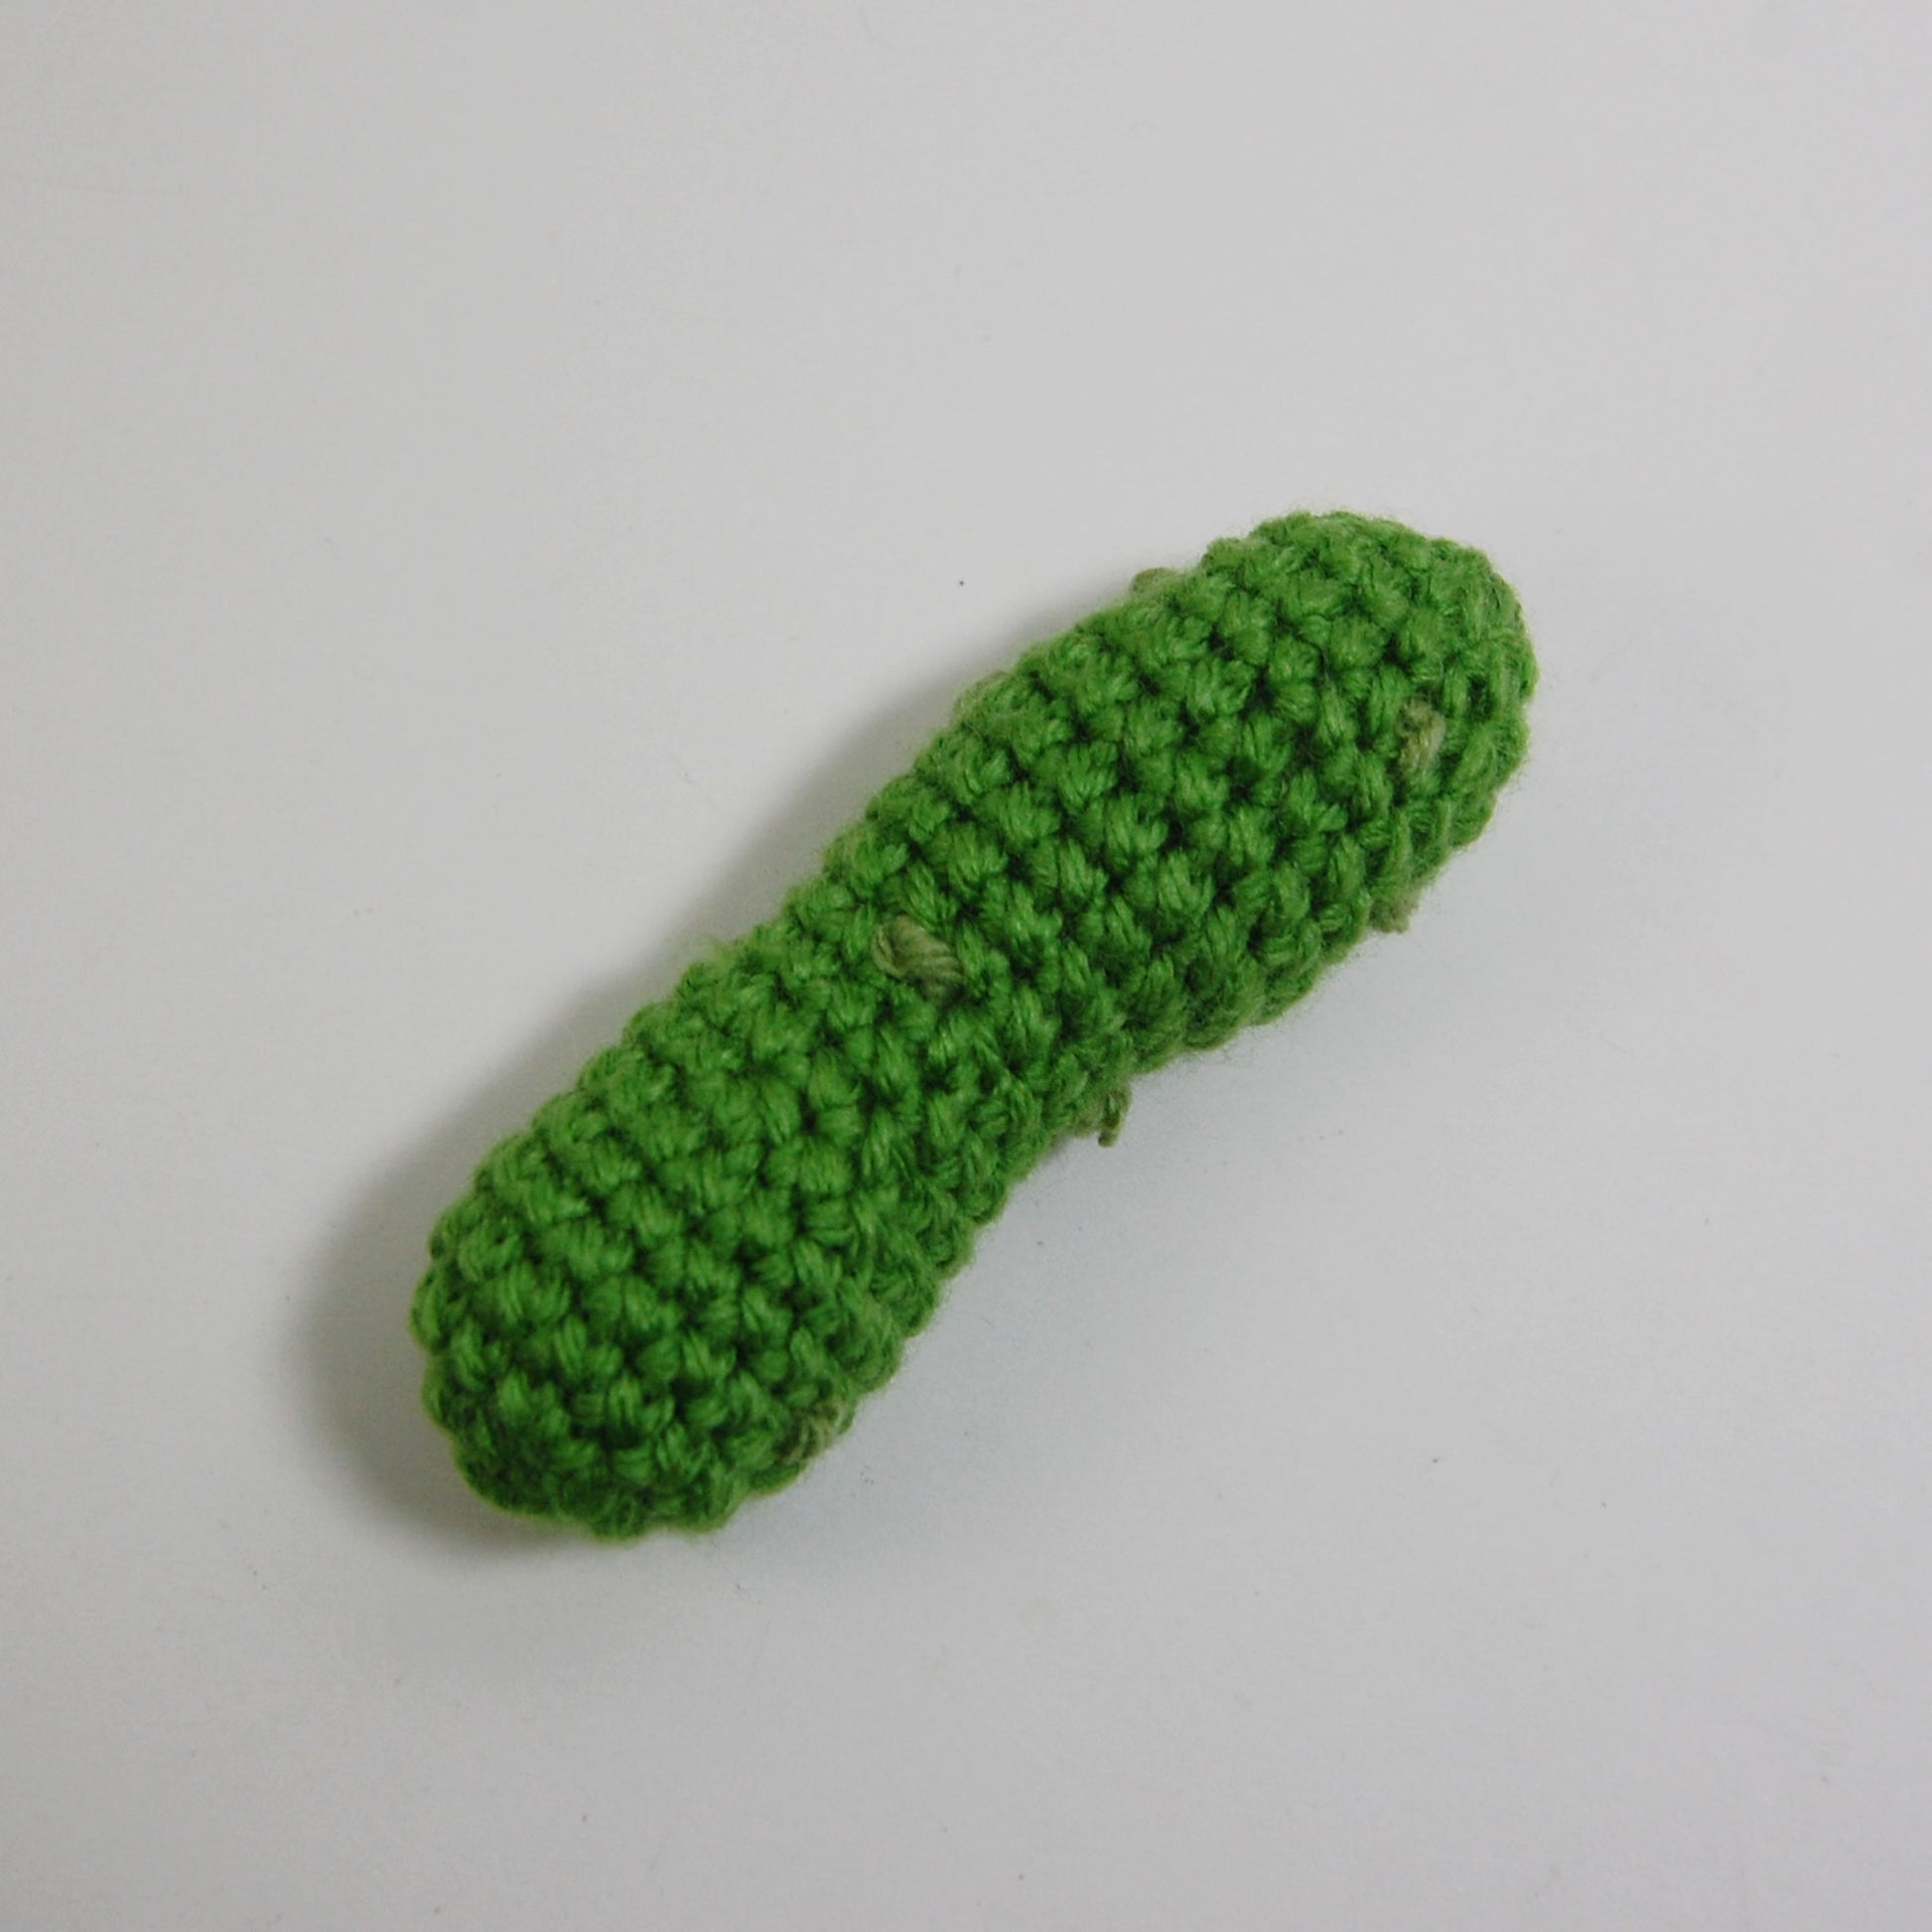 Pickles amigurumi pattern 